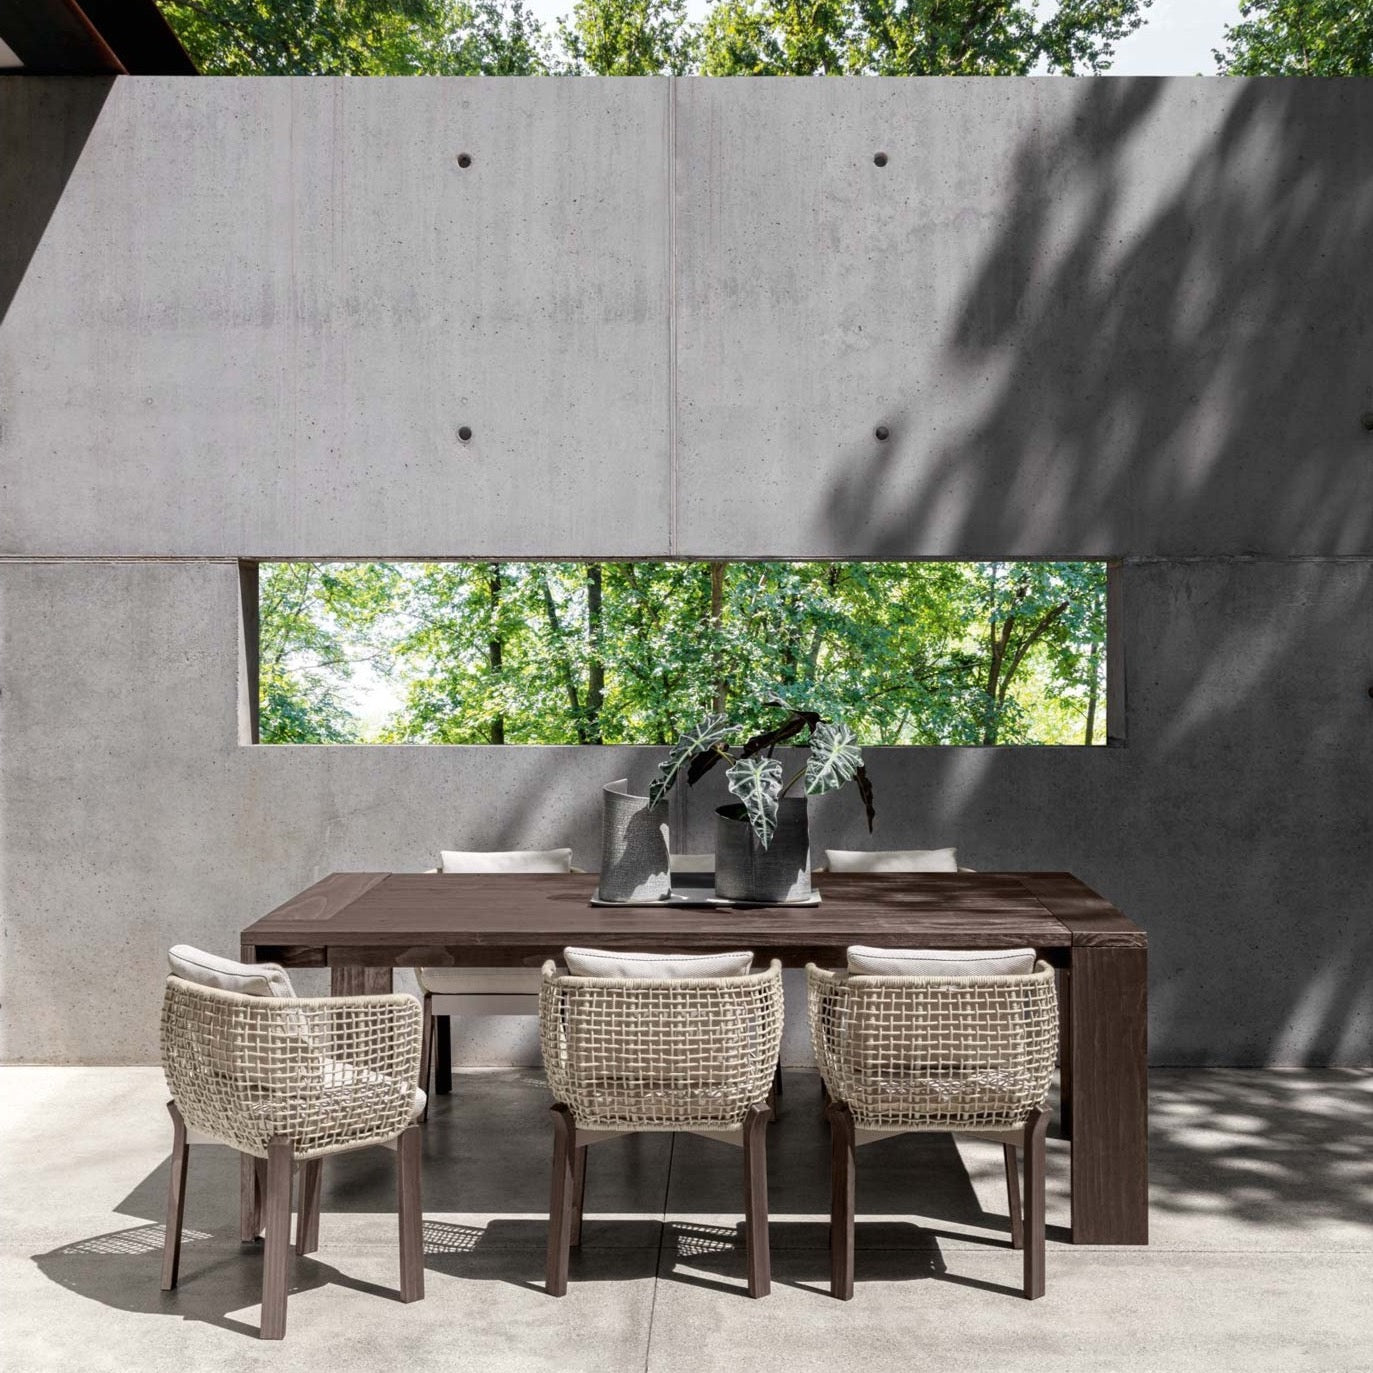 Table_Bois_Chaise_Design_jardin